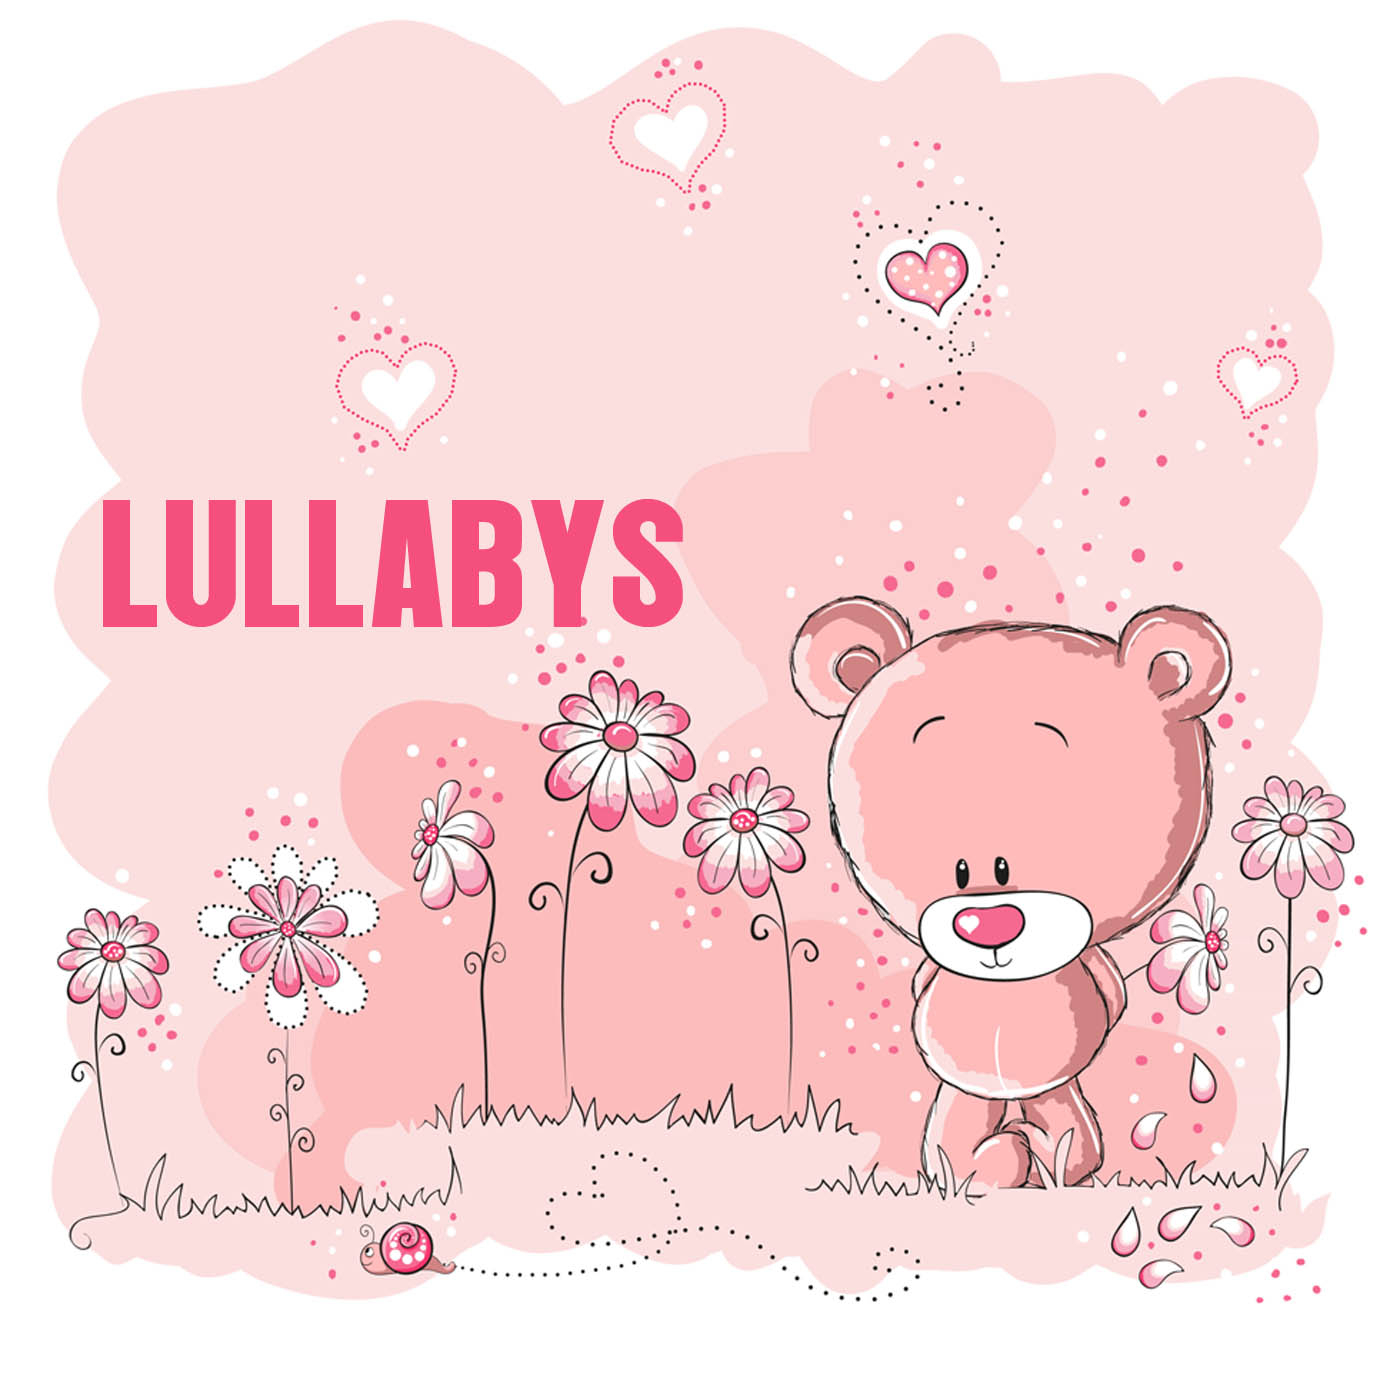 Lullabys